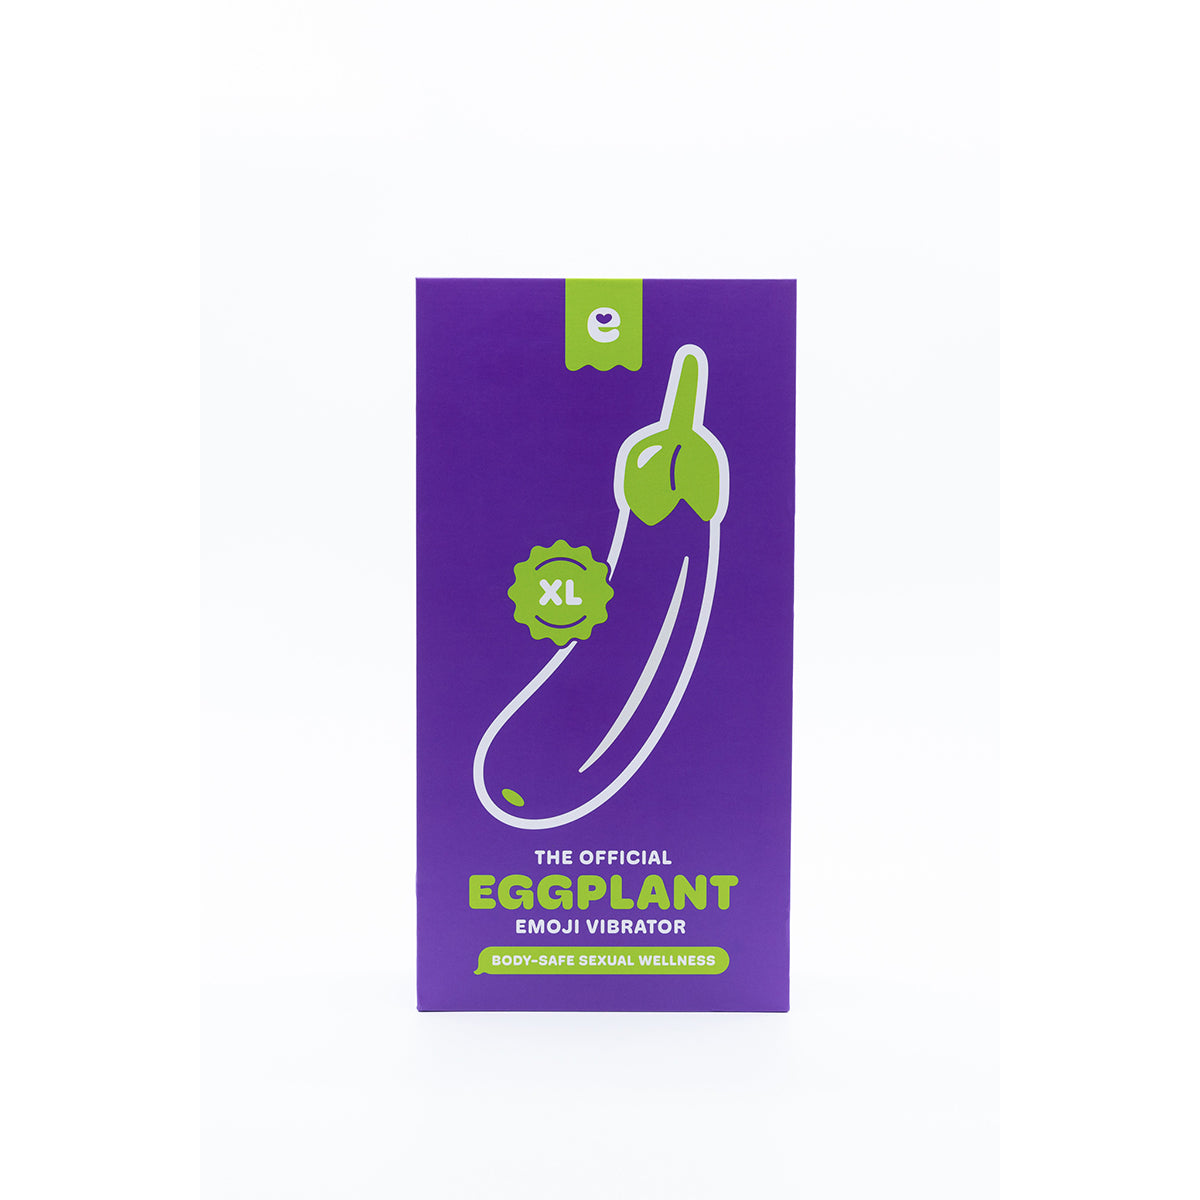 Eggplant XL Vibrator by Emojibator: Pleasure Upgrade